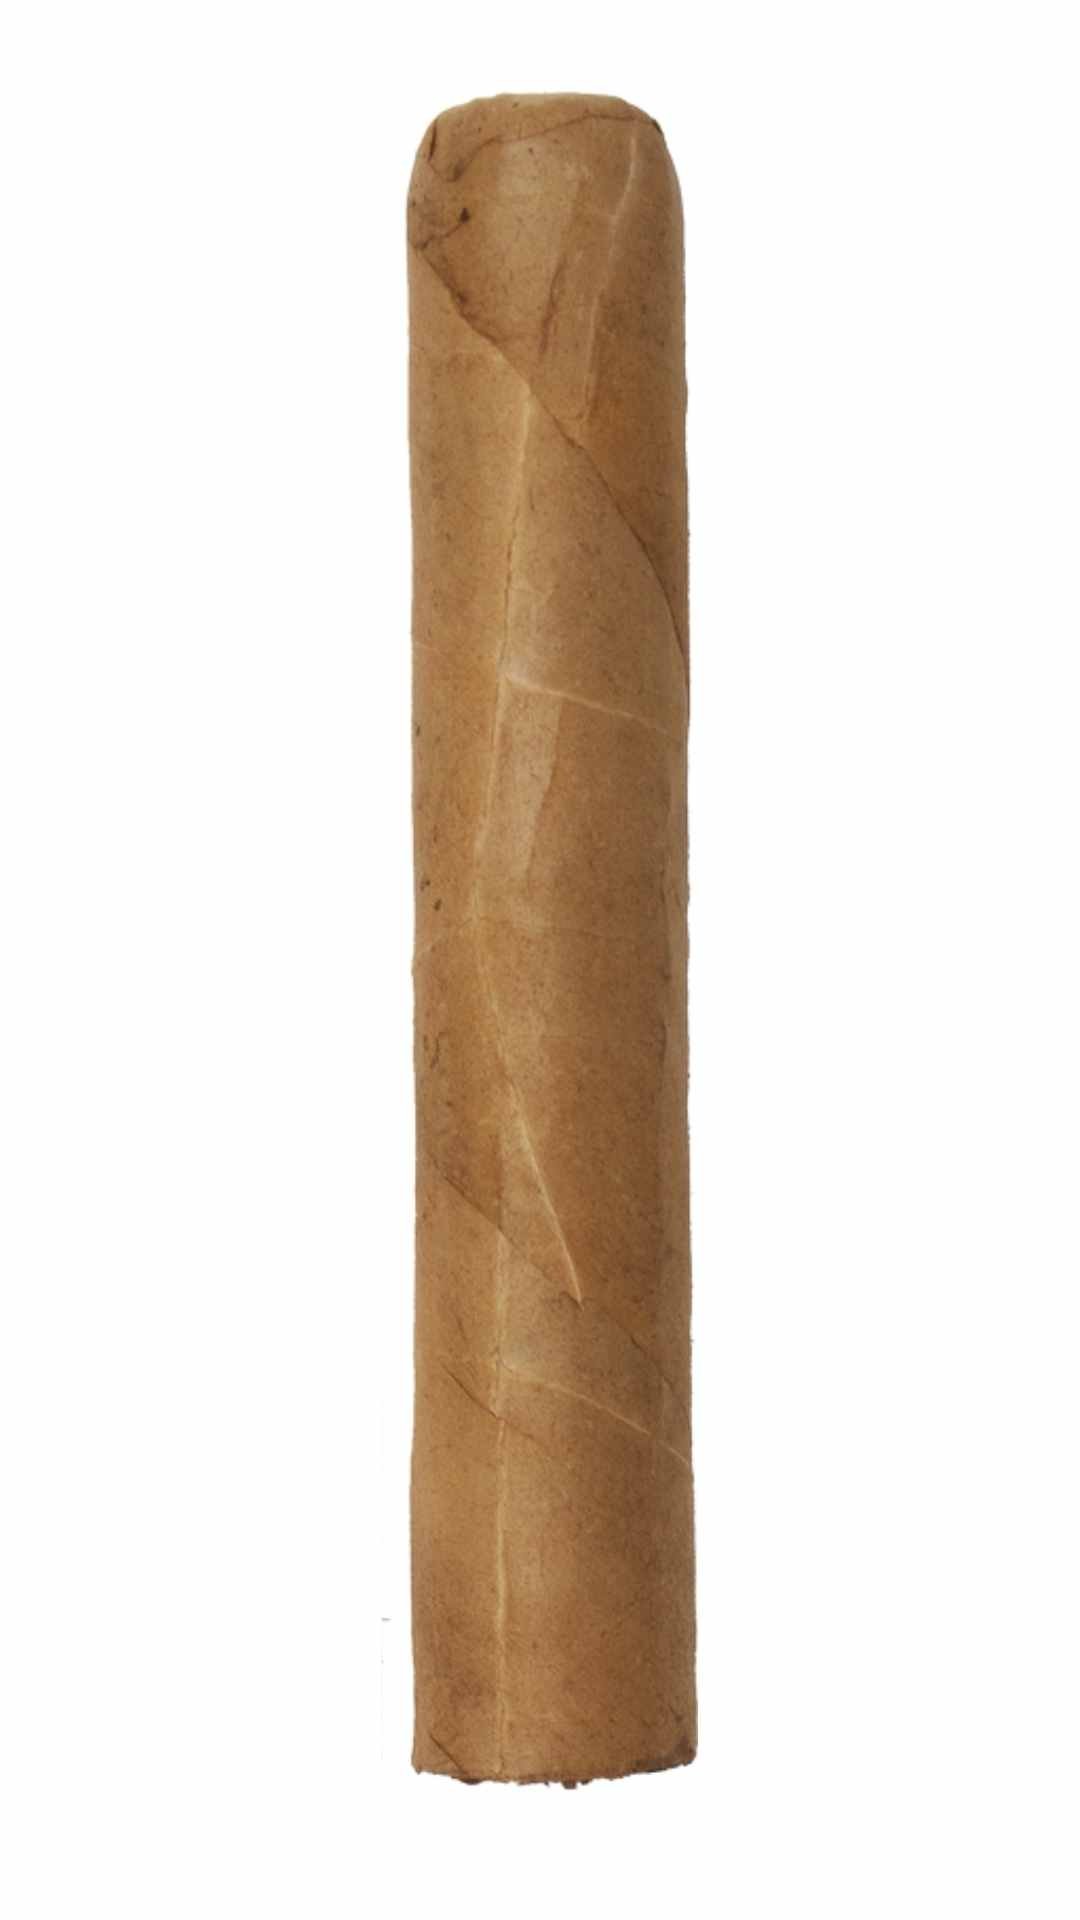 PaperBoy Connecticut single cigar